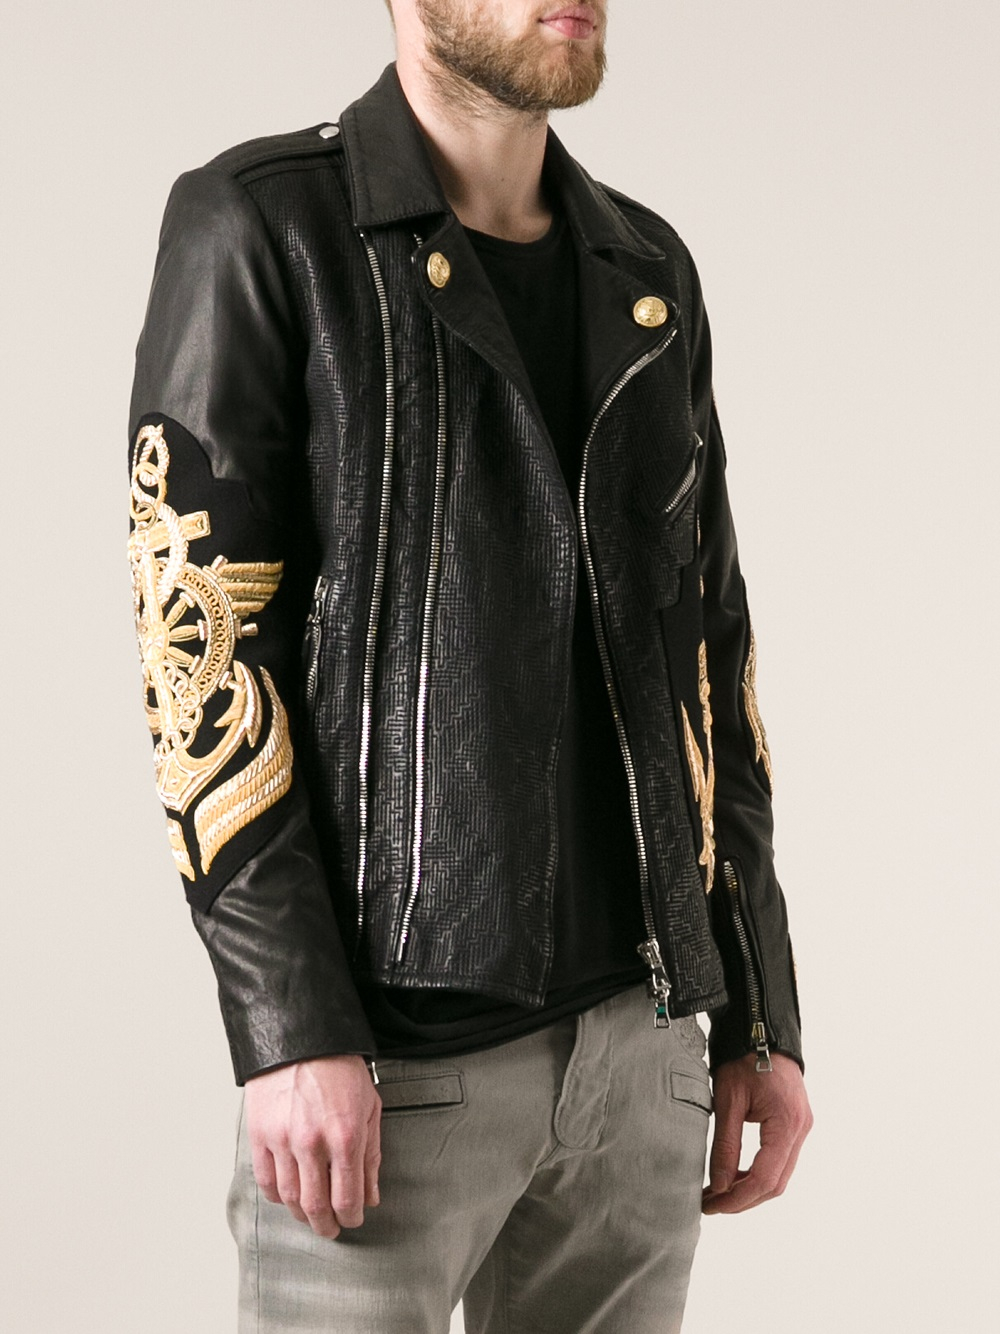 Lyst - Balmain Fox Fur Collar Jacket in Black for Men